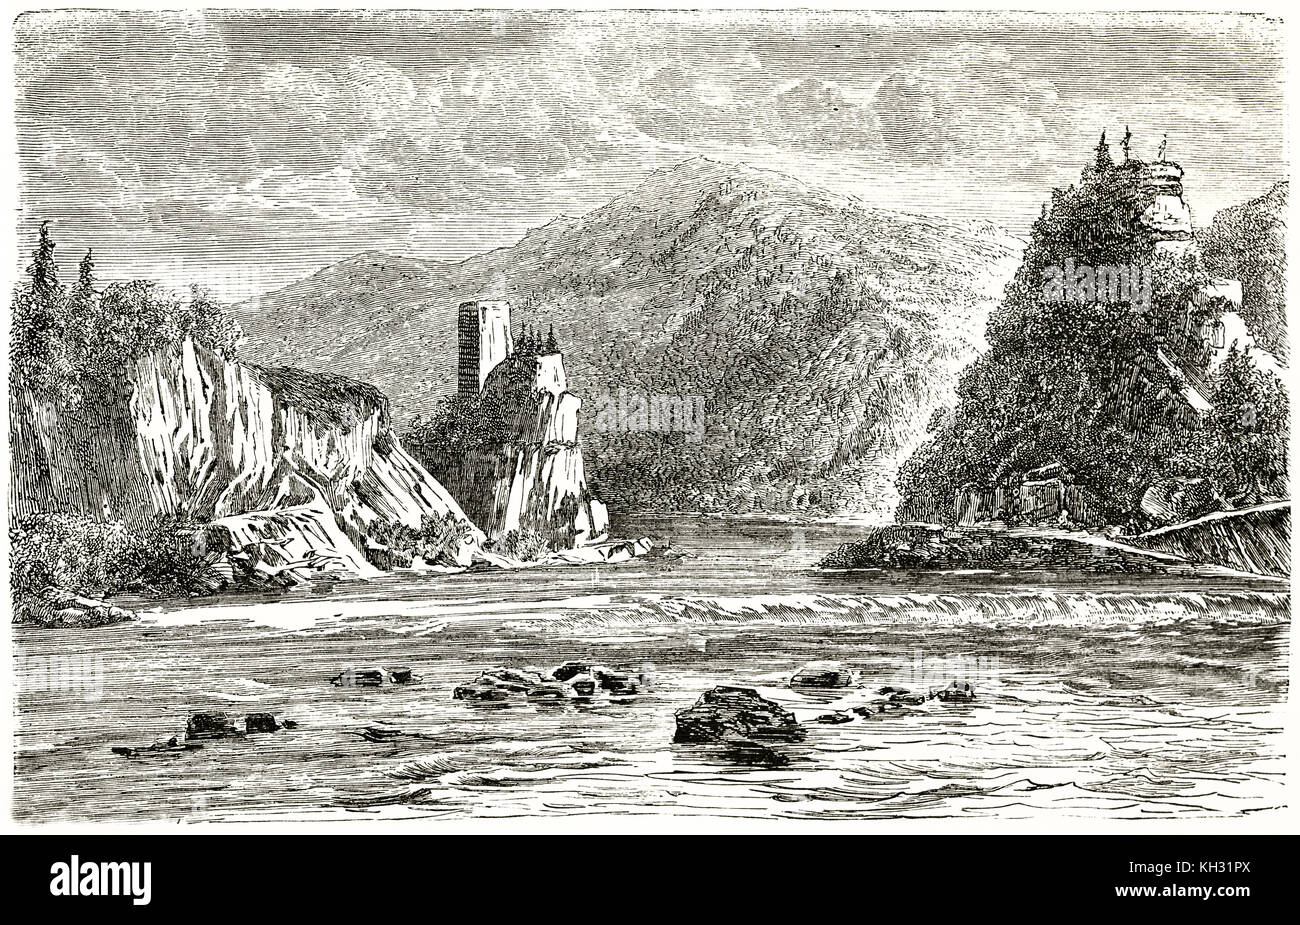 Old view of the Strudel (whirlpool on the Danube), Austria. By Lancelot, publ. on le Tour du Monde, Paris, 1863 Stock Photo